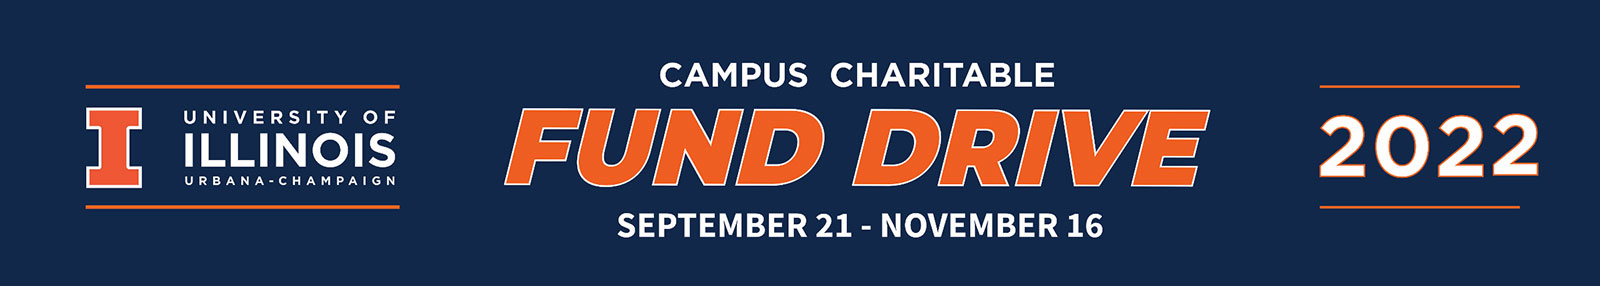 Campus Charitable Fund Drive September 22 - November 17, 2021